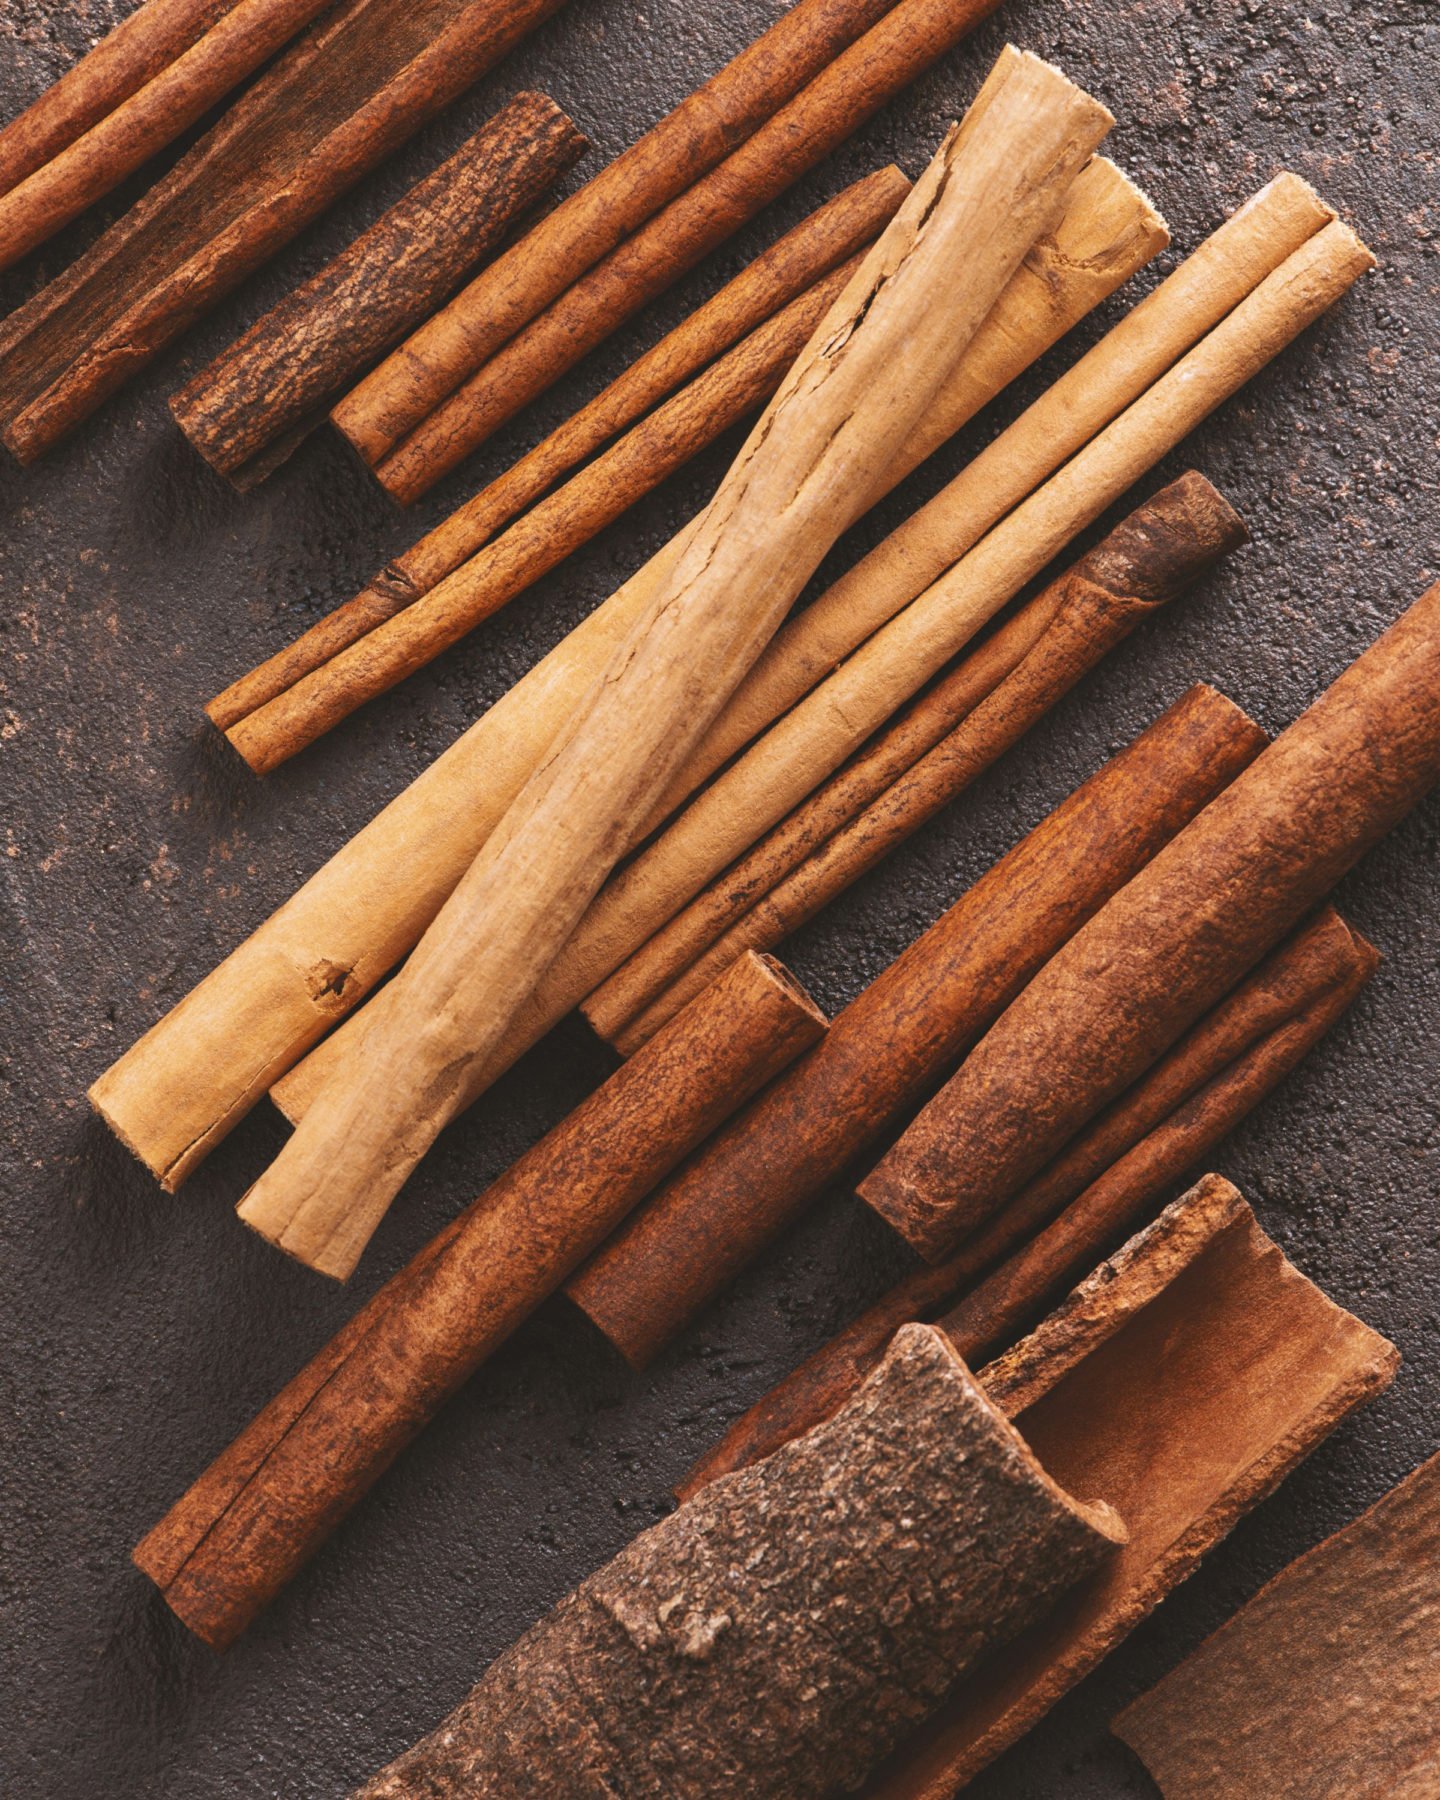 assorted sticks of cinnamon